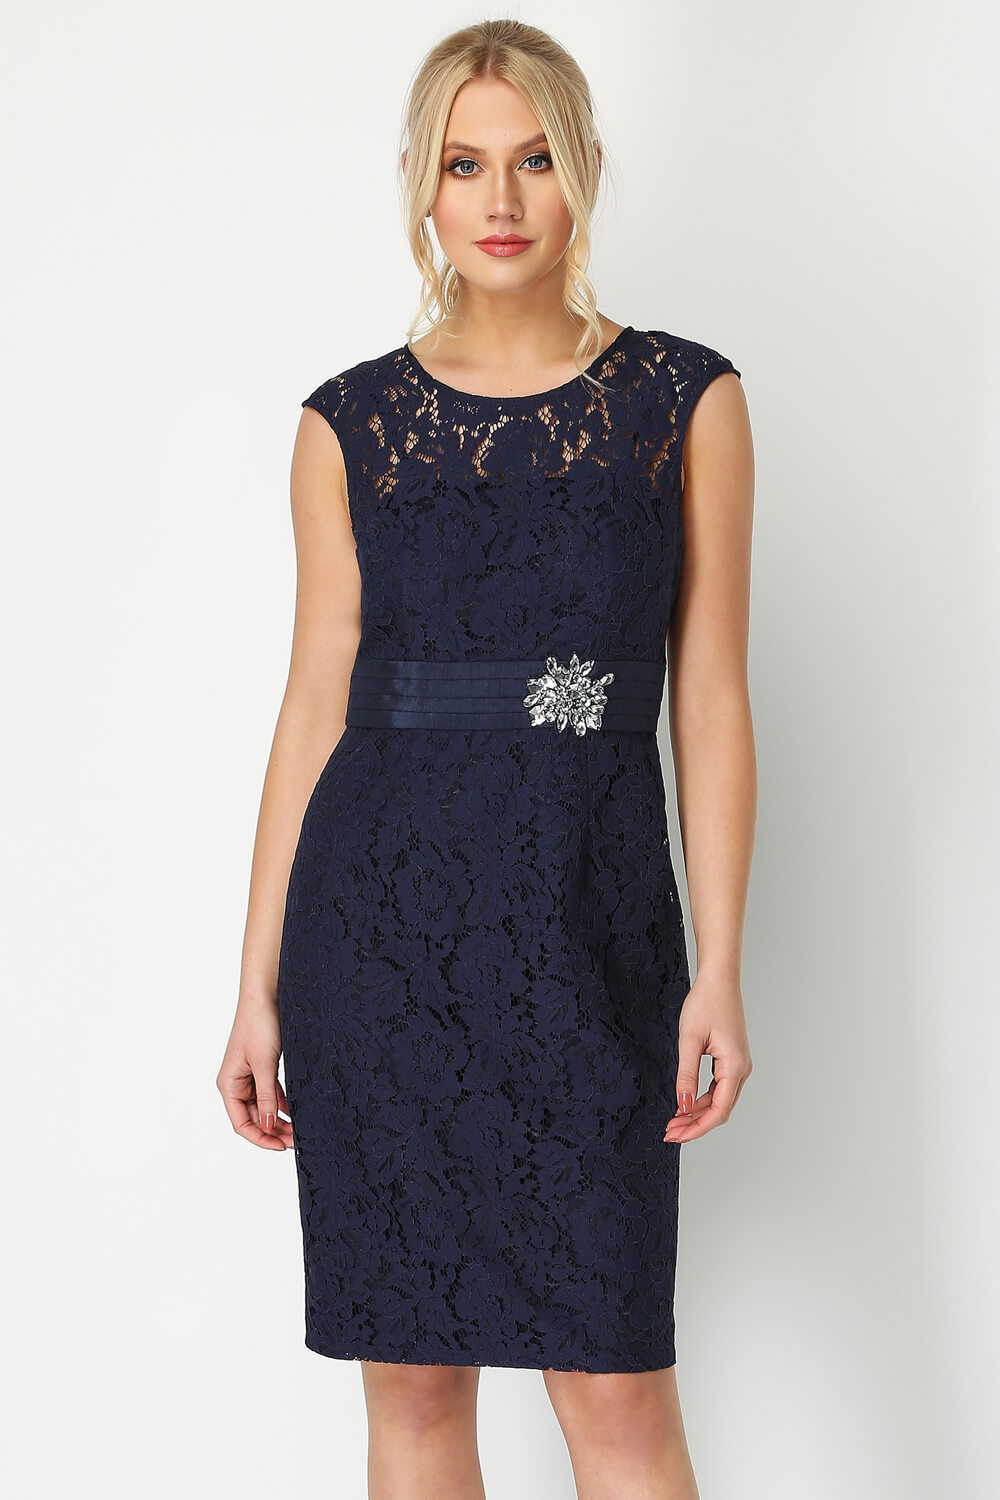  Lace Embellished Trim Dress, Image 2 of 4